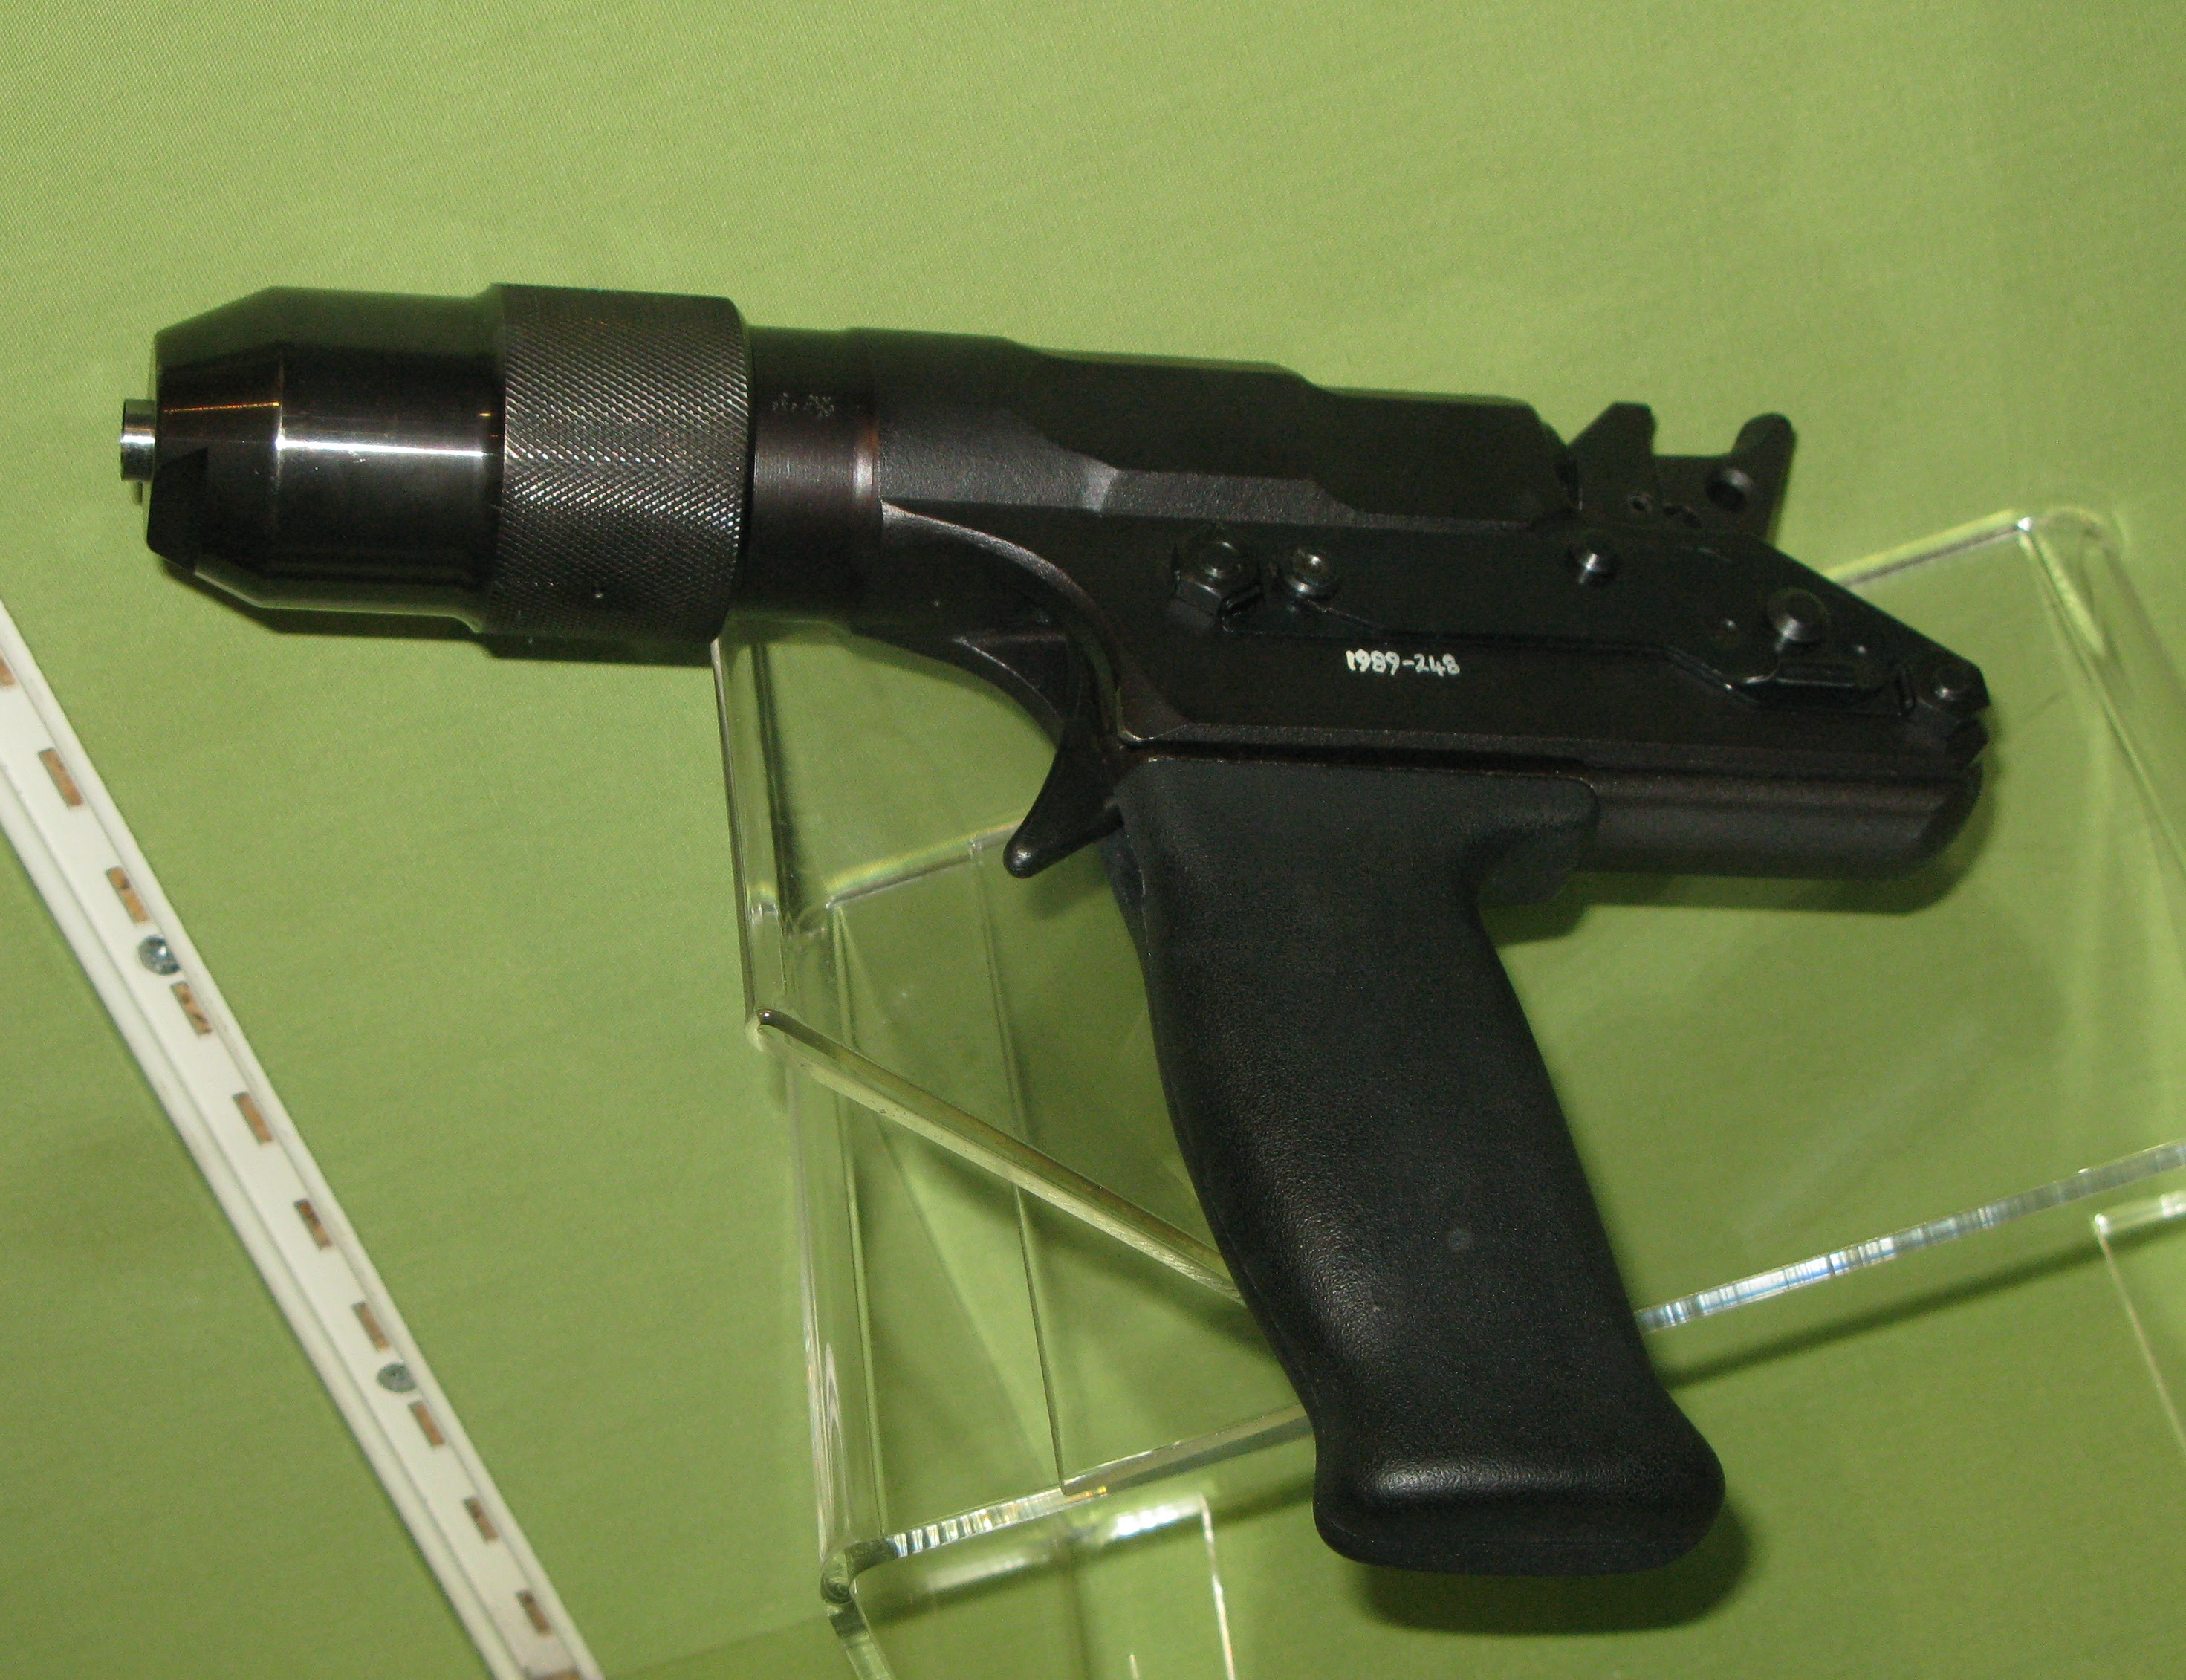 http://upload.wikimedia.org/wikipedia/commons/a/af/Cash%27s_captive_bolt_pistol.jpg